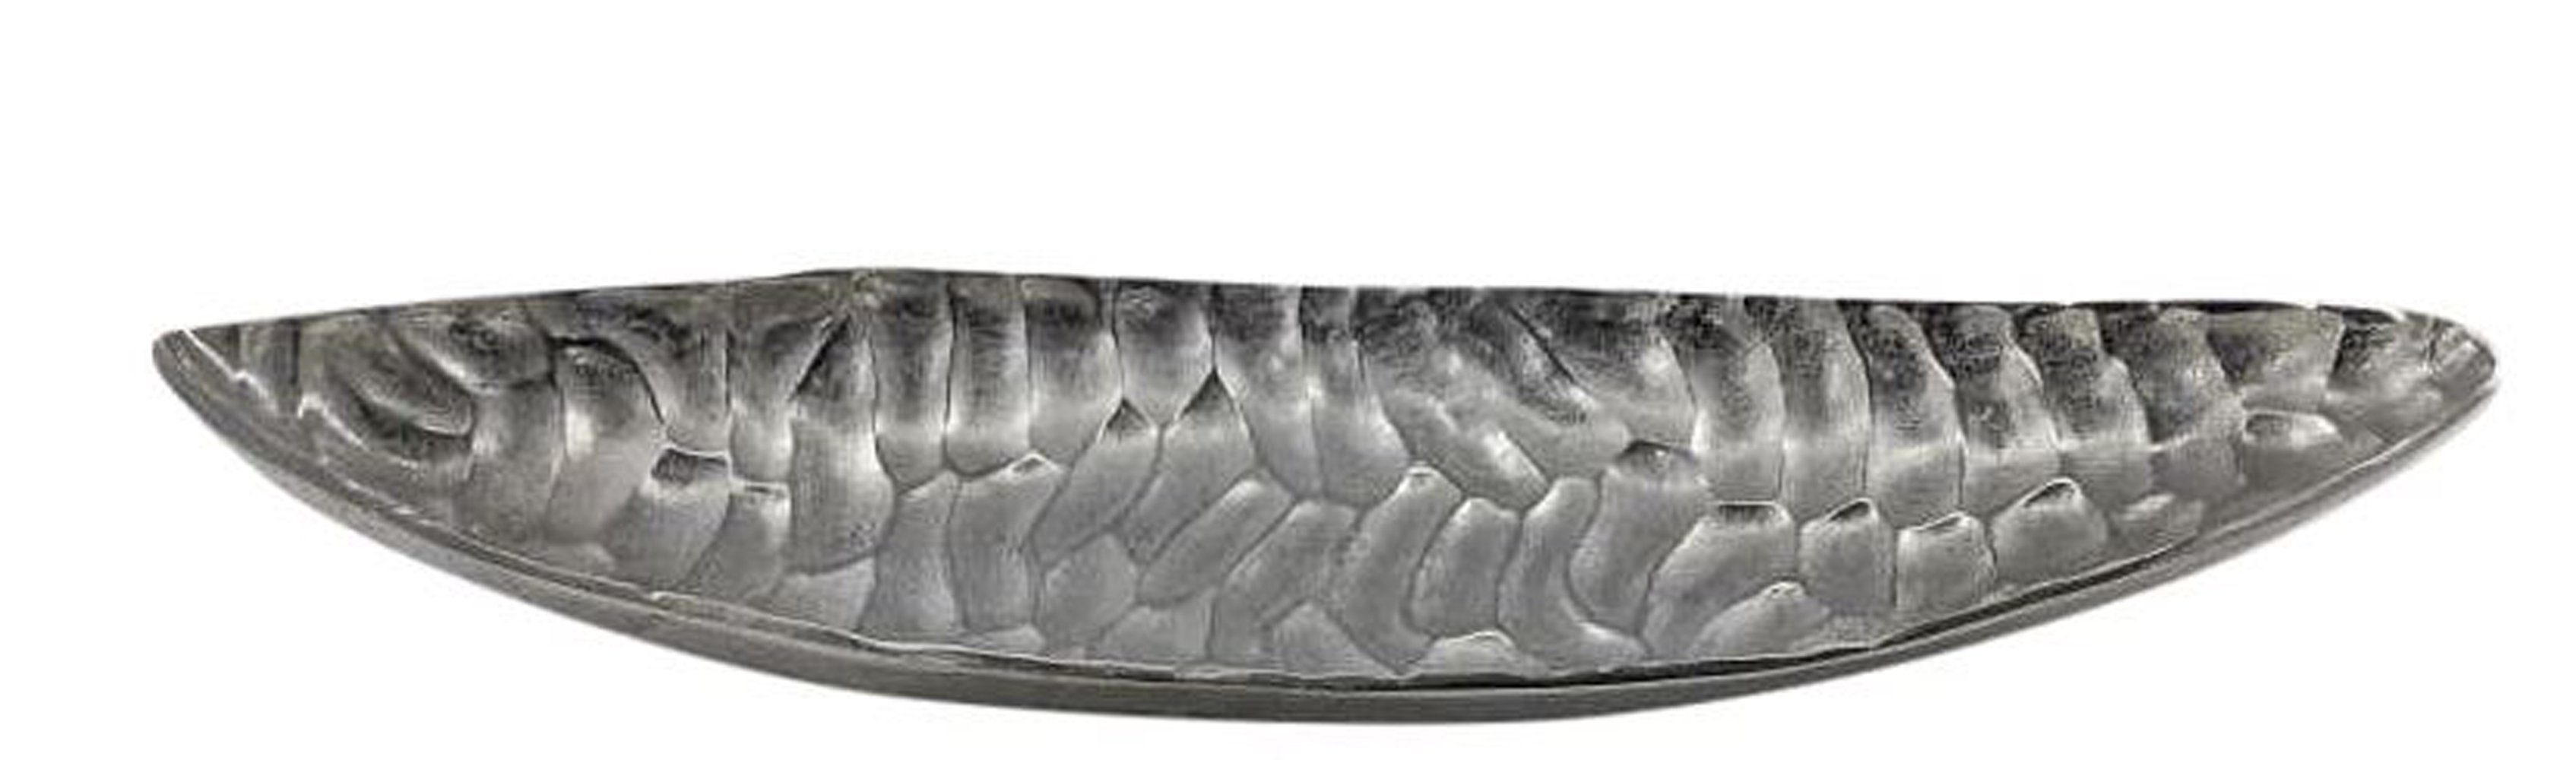 LaCasa Dekoschale Wunderschöne Schale Alu Nickel 55x19x6cm silber antik oval gewellt (1 St)